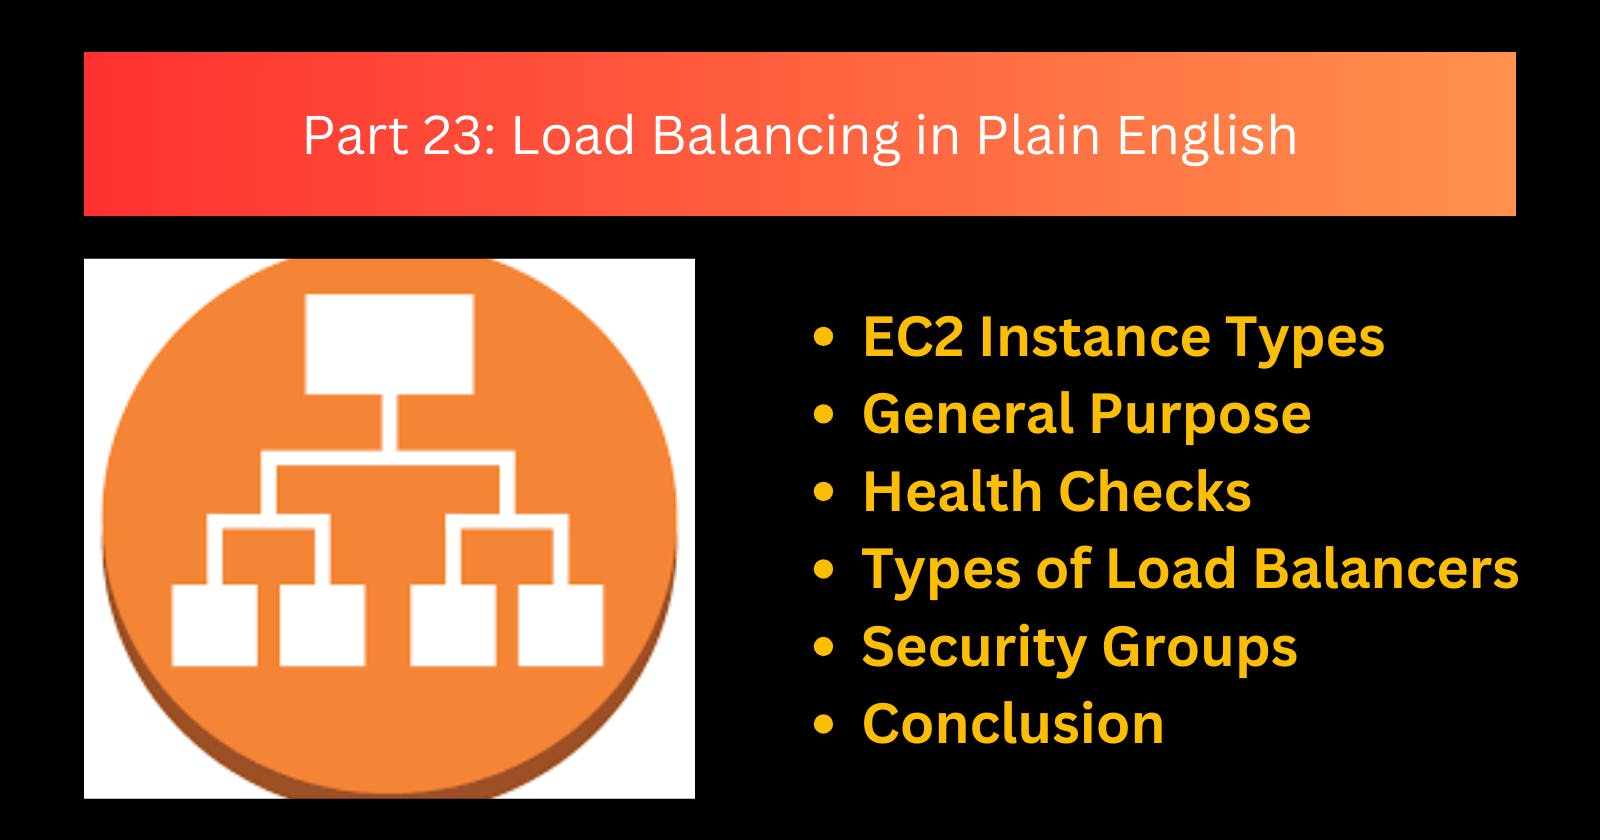 Part 23: Load Balancing in Plain English